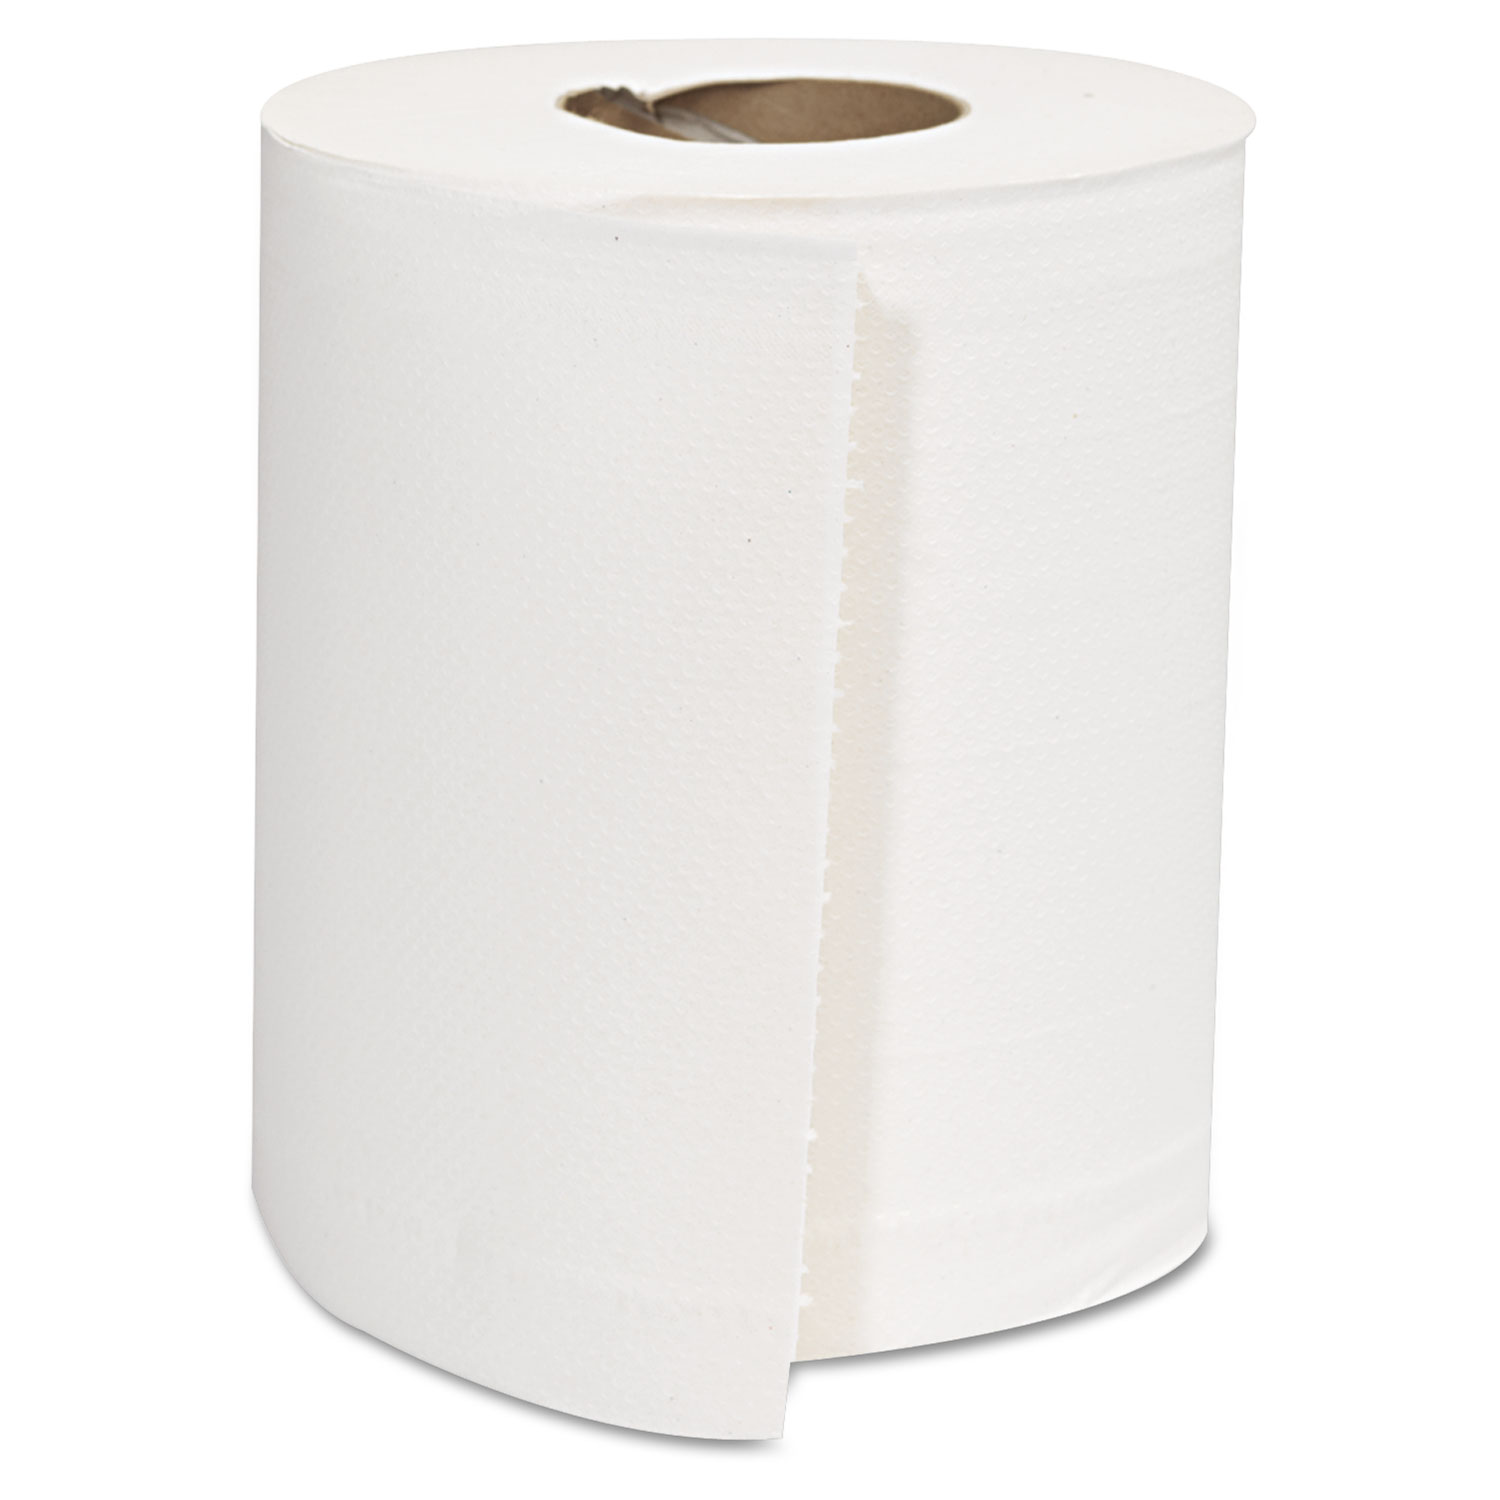  GEN G603 Center-Pull Roll Towels, 2-Ply, White, 8 x 10, 600/Roll, 6 Rolls/Carton (GENCPULL) 